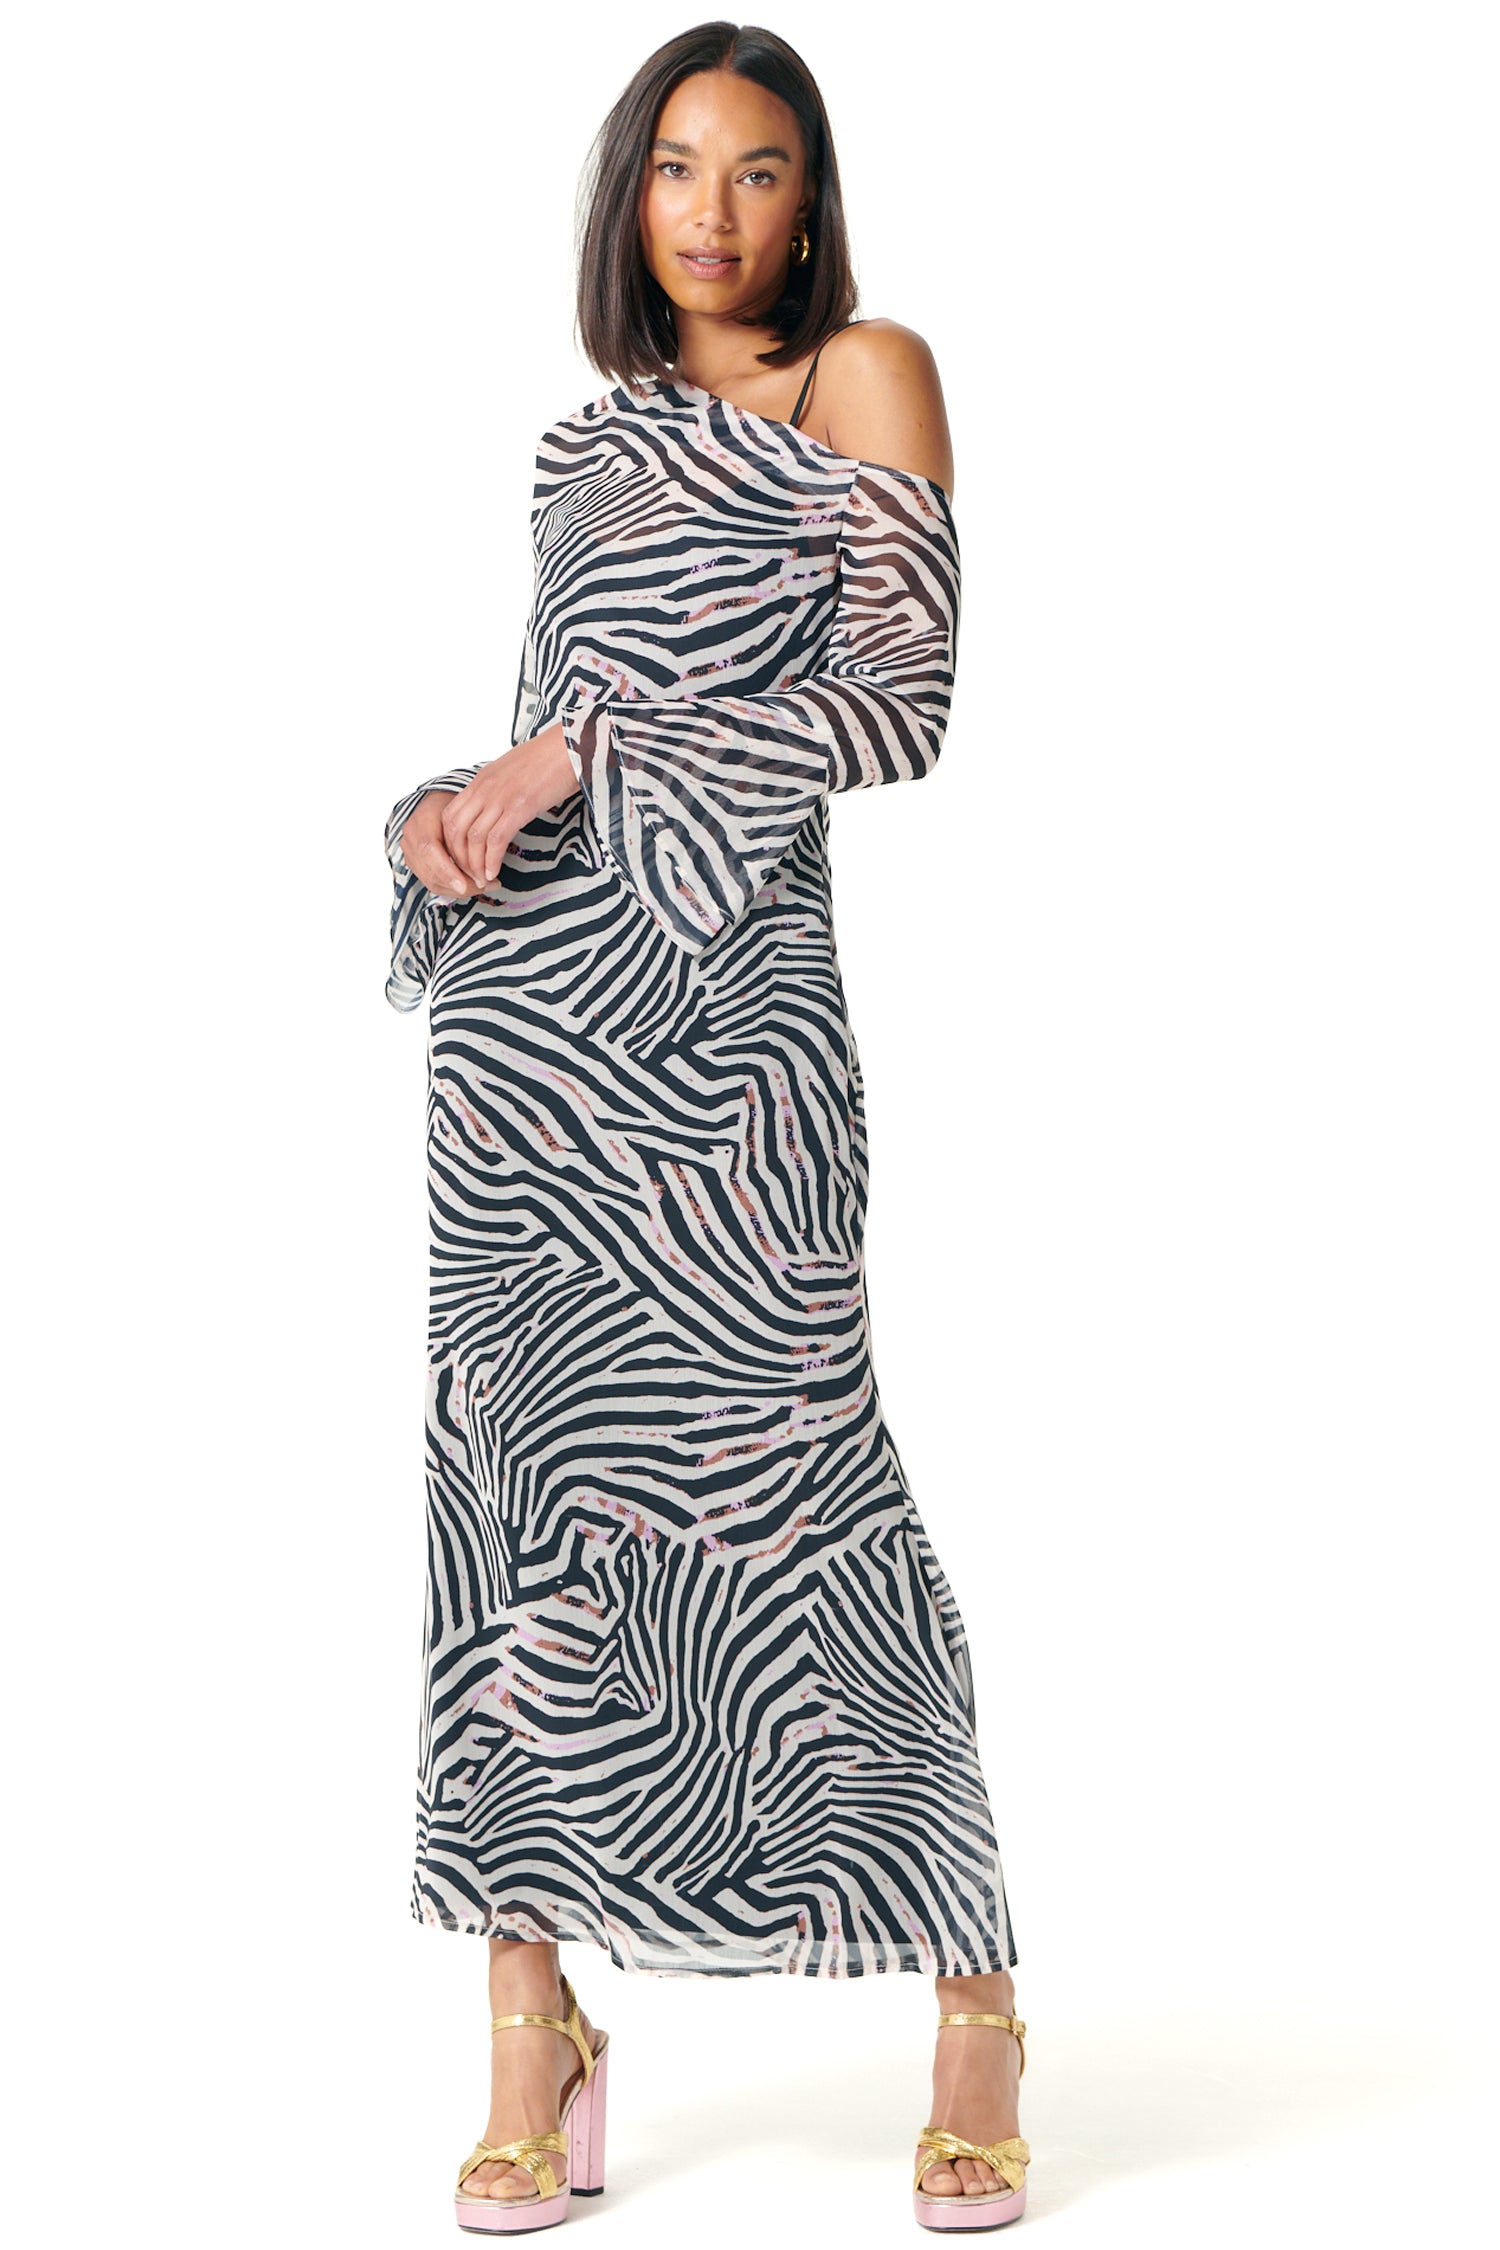 Model wearing Zebra Ophelia Dress standing facing the camera